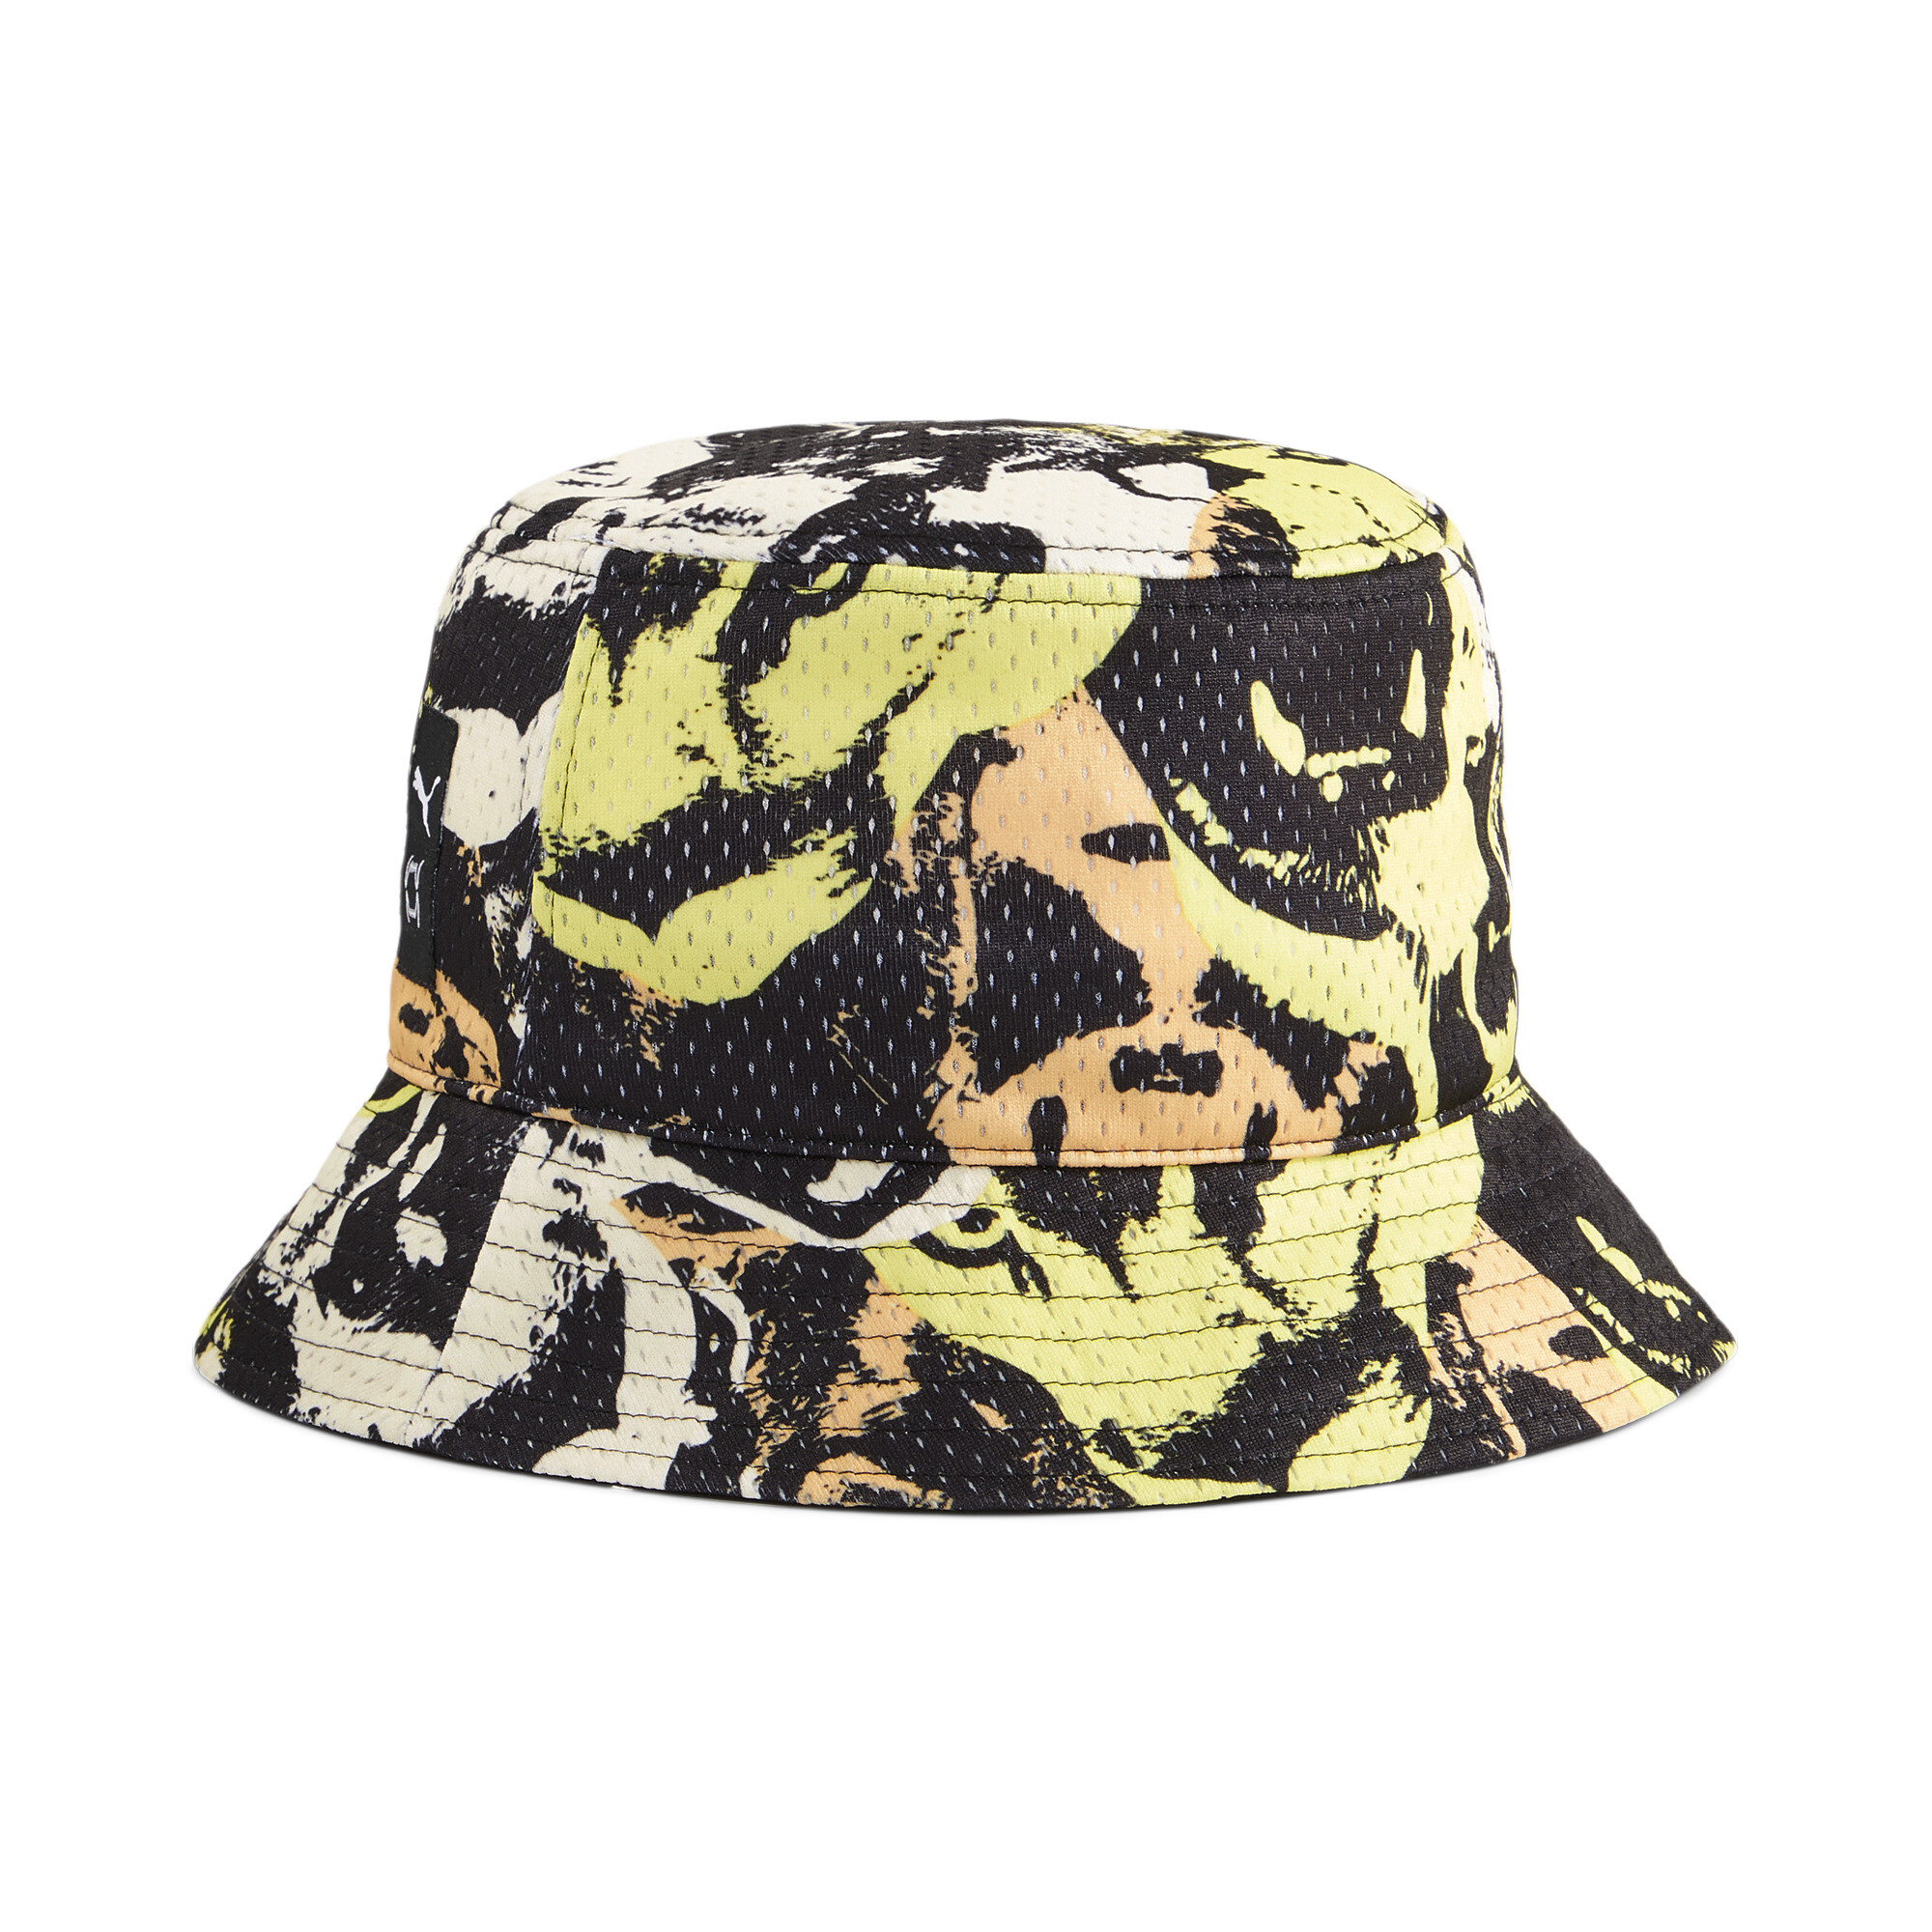 Puma Basketball Bucket Hat, Yellow, Size L/XL, Accessories